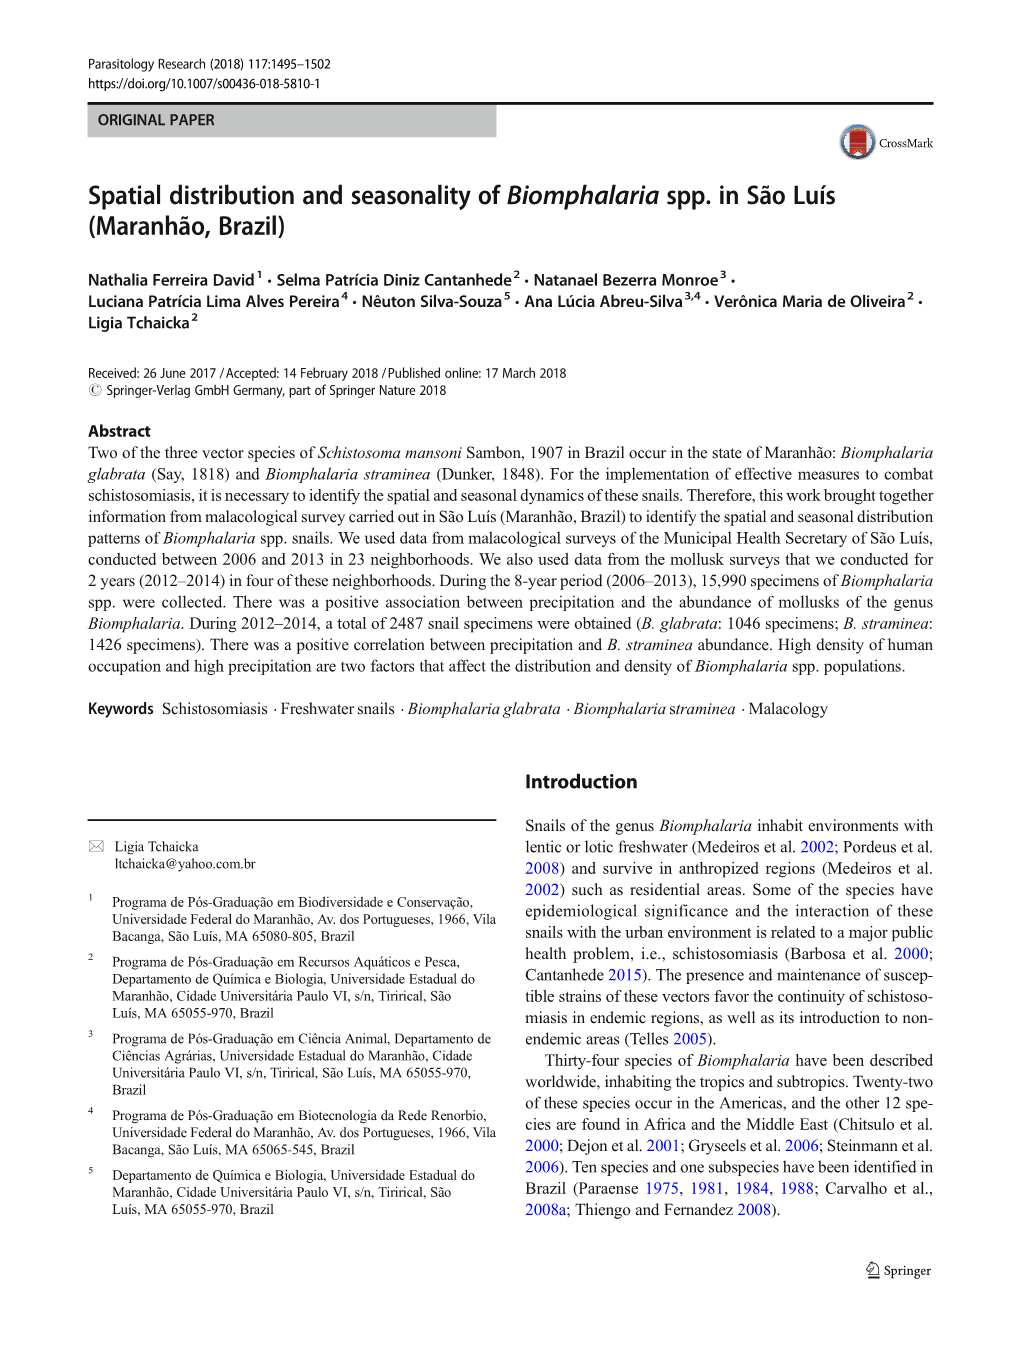 Spatial Distribution and Seasonality of Biomphalaria Spp